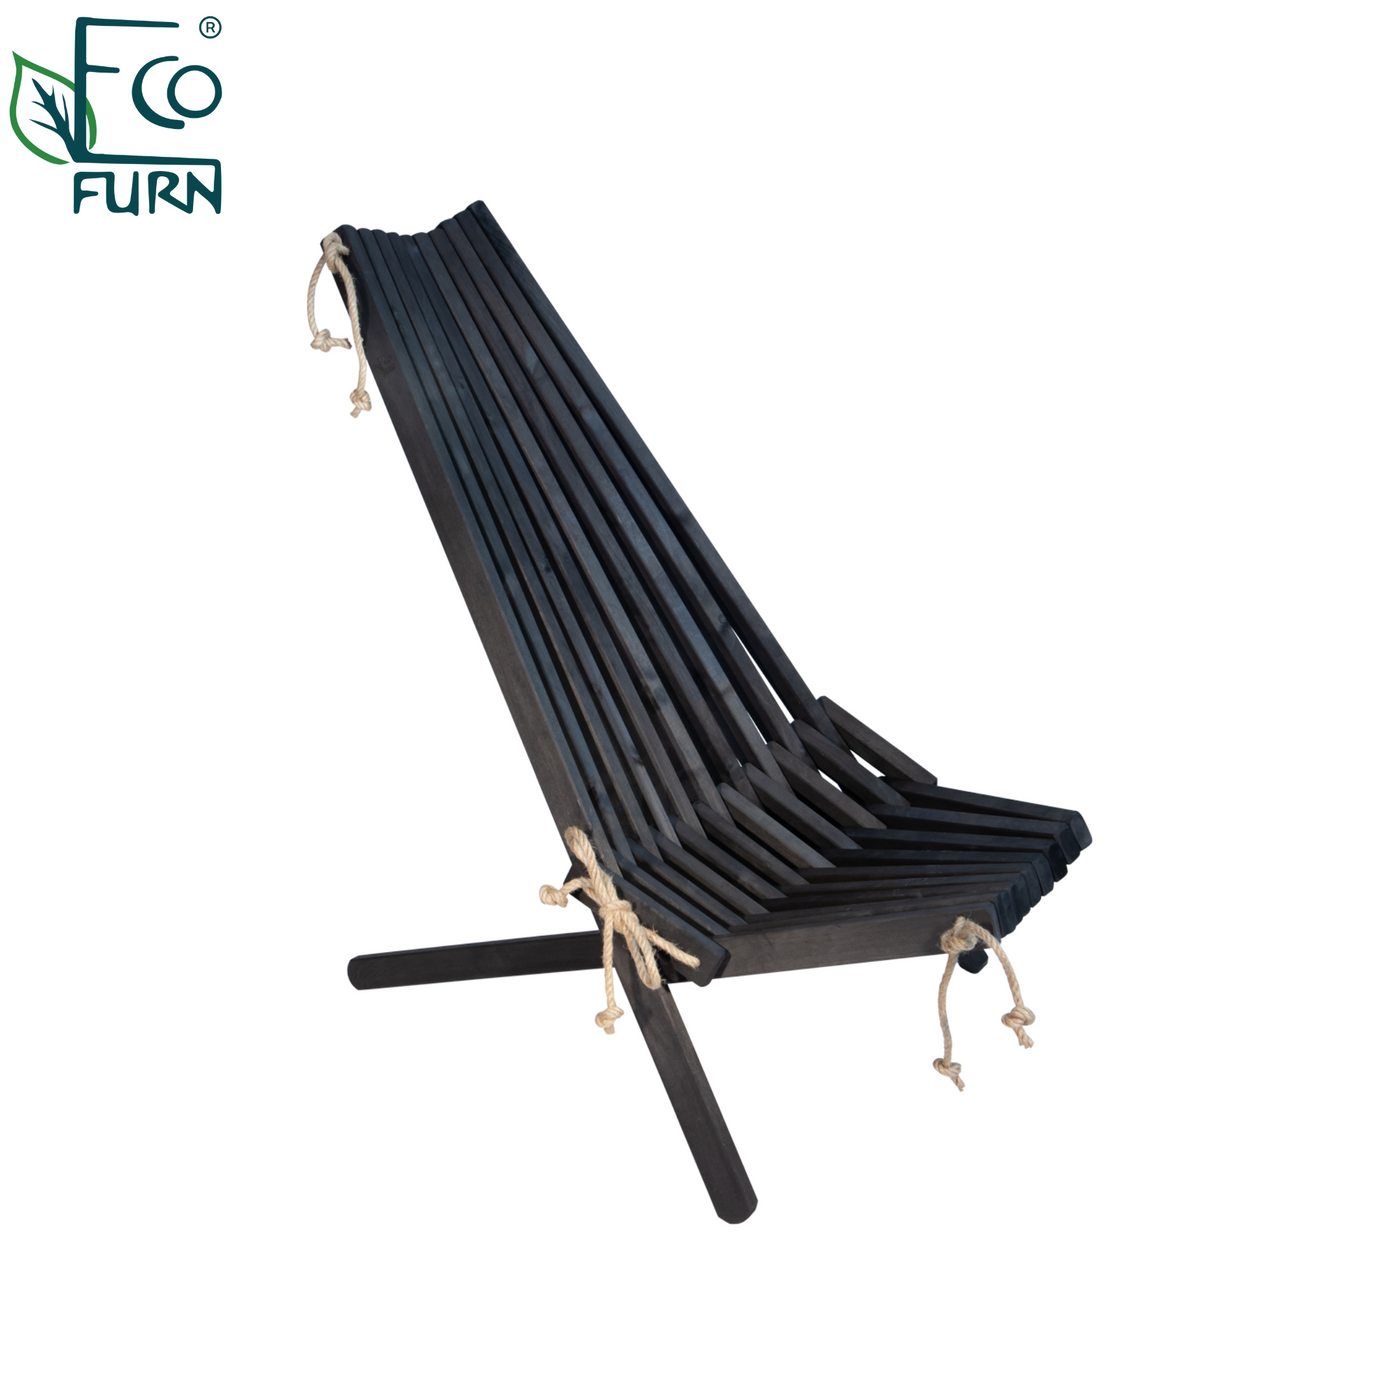 EcoFurn® Ekotuolisetti – 2 tuolia ja rahi – Tervaleppä musta